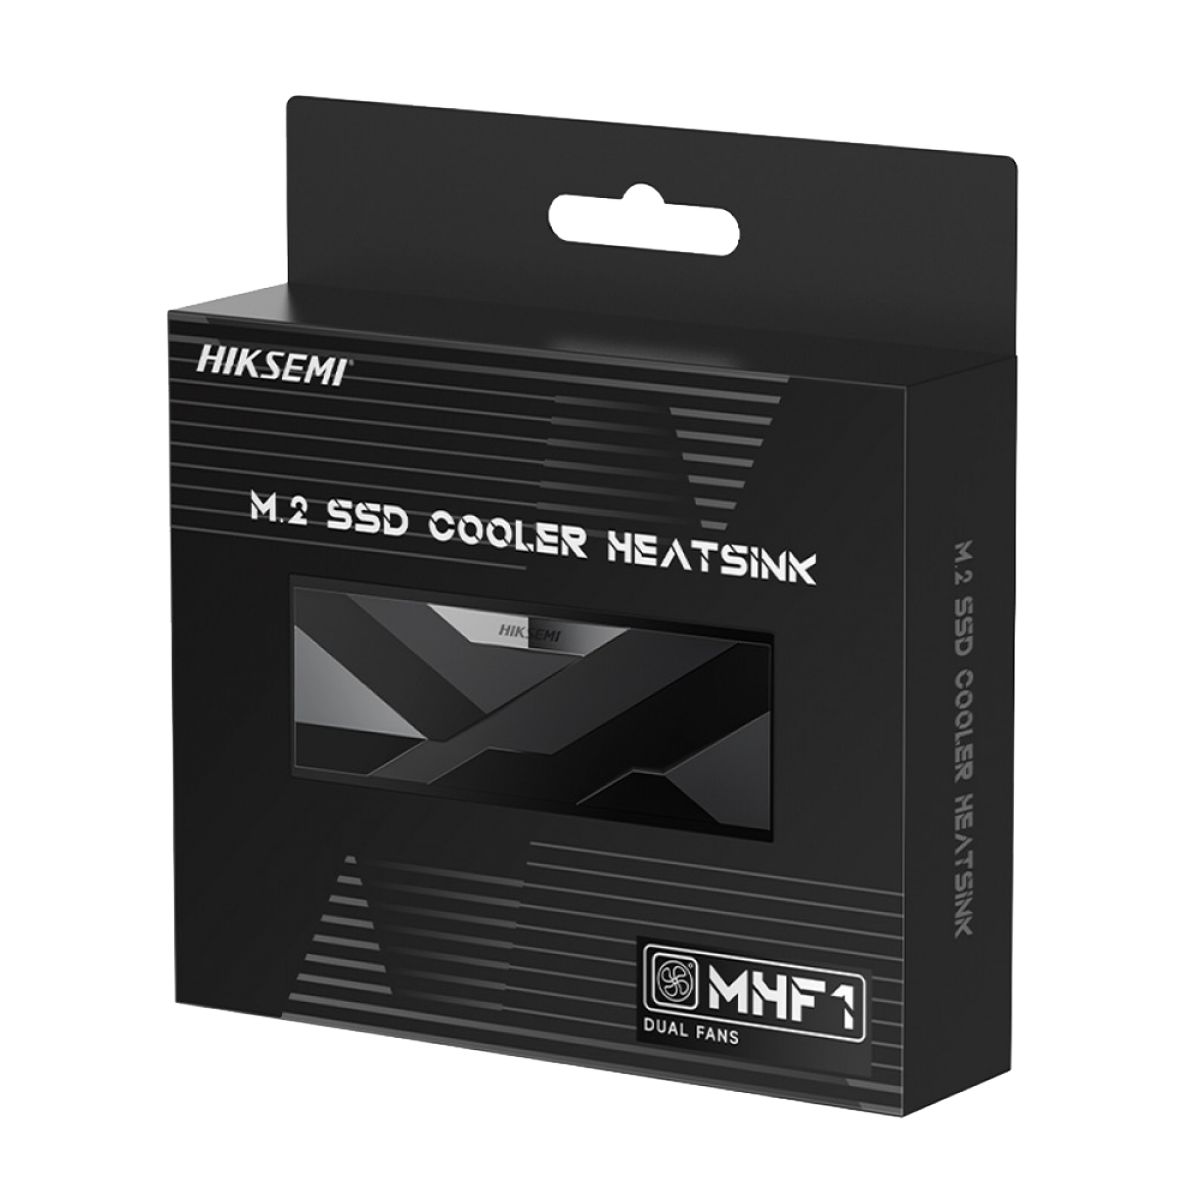 Dissipador de Calor Thermal HIKSEMI, SSD Cooler Heatsink MHF1, Para M.2 2280 NVMe SSD, HS-RADIATOR-MHF1